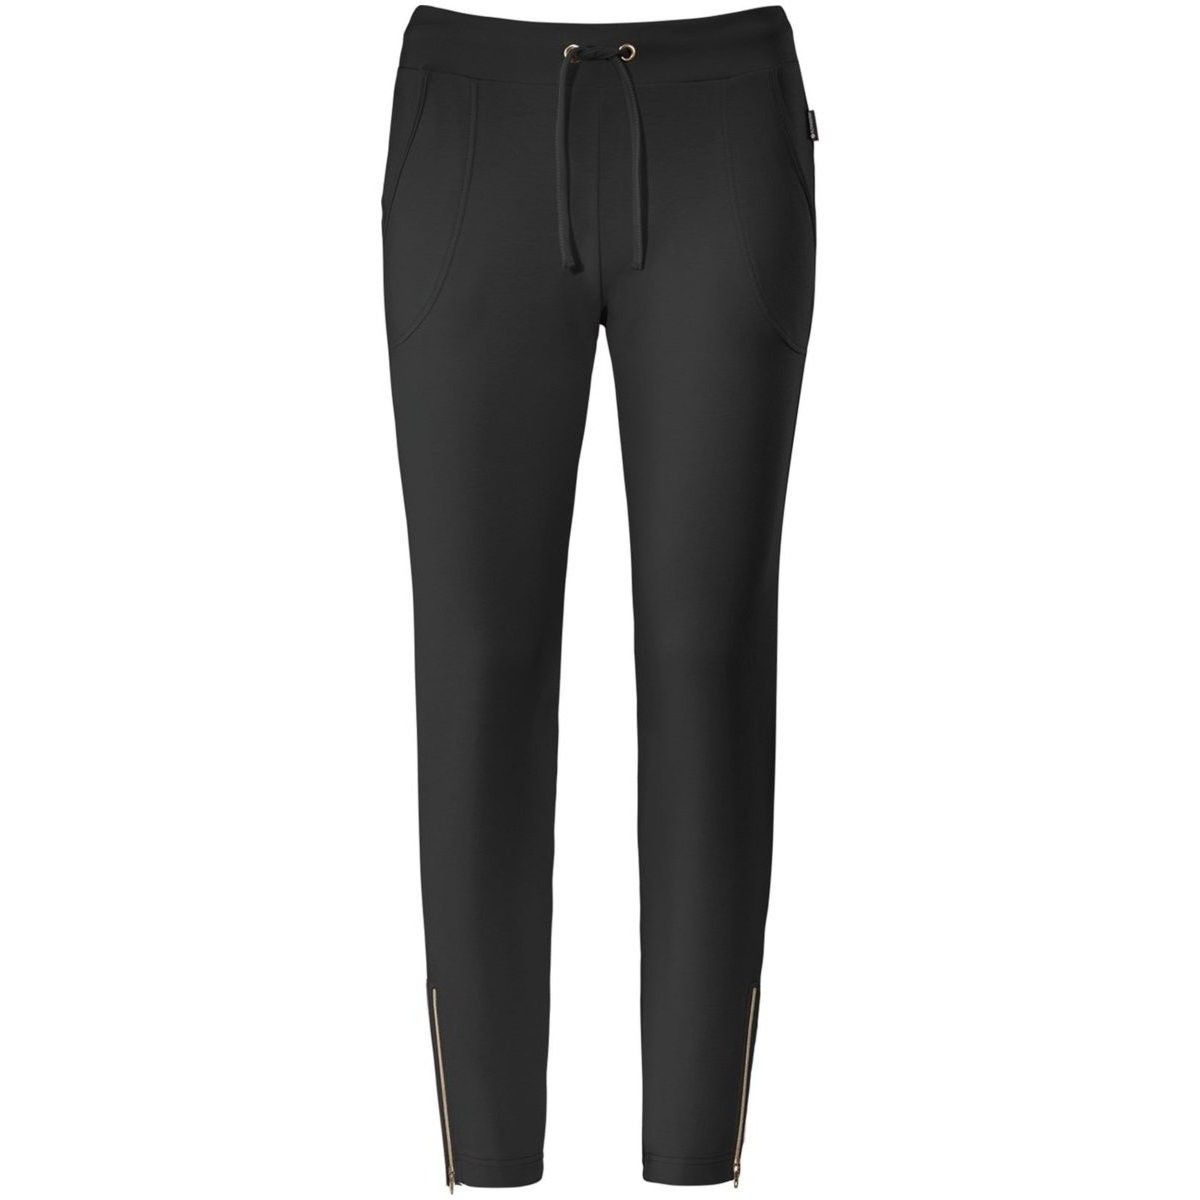 Textiel Dames Broeken / Pantalons Schneider Sportswear  Zwart